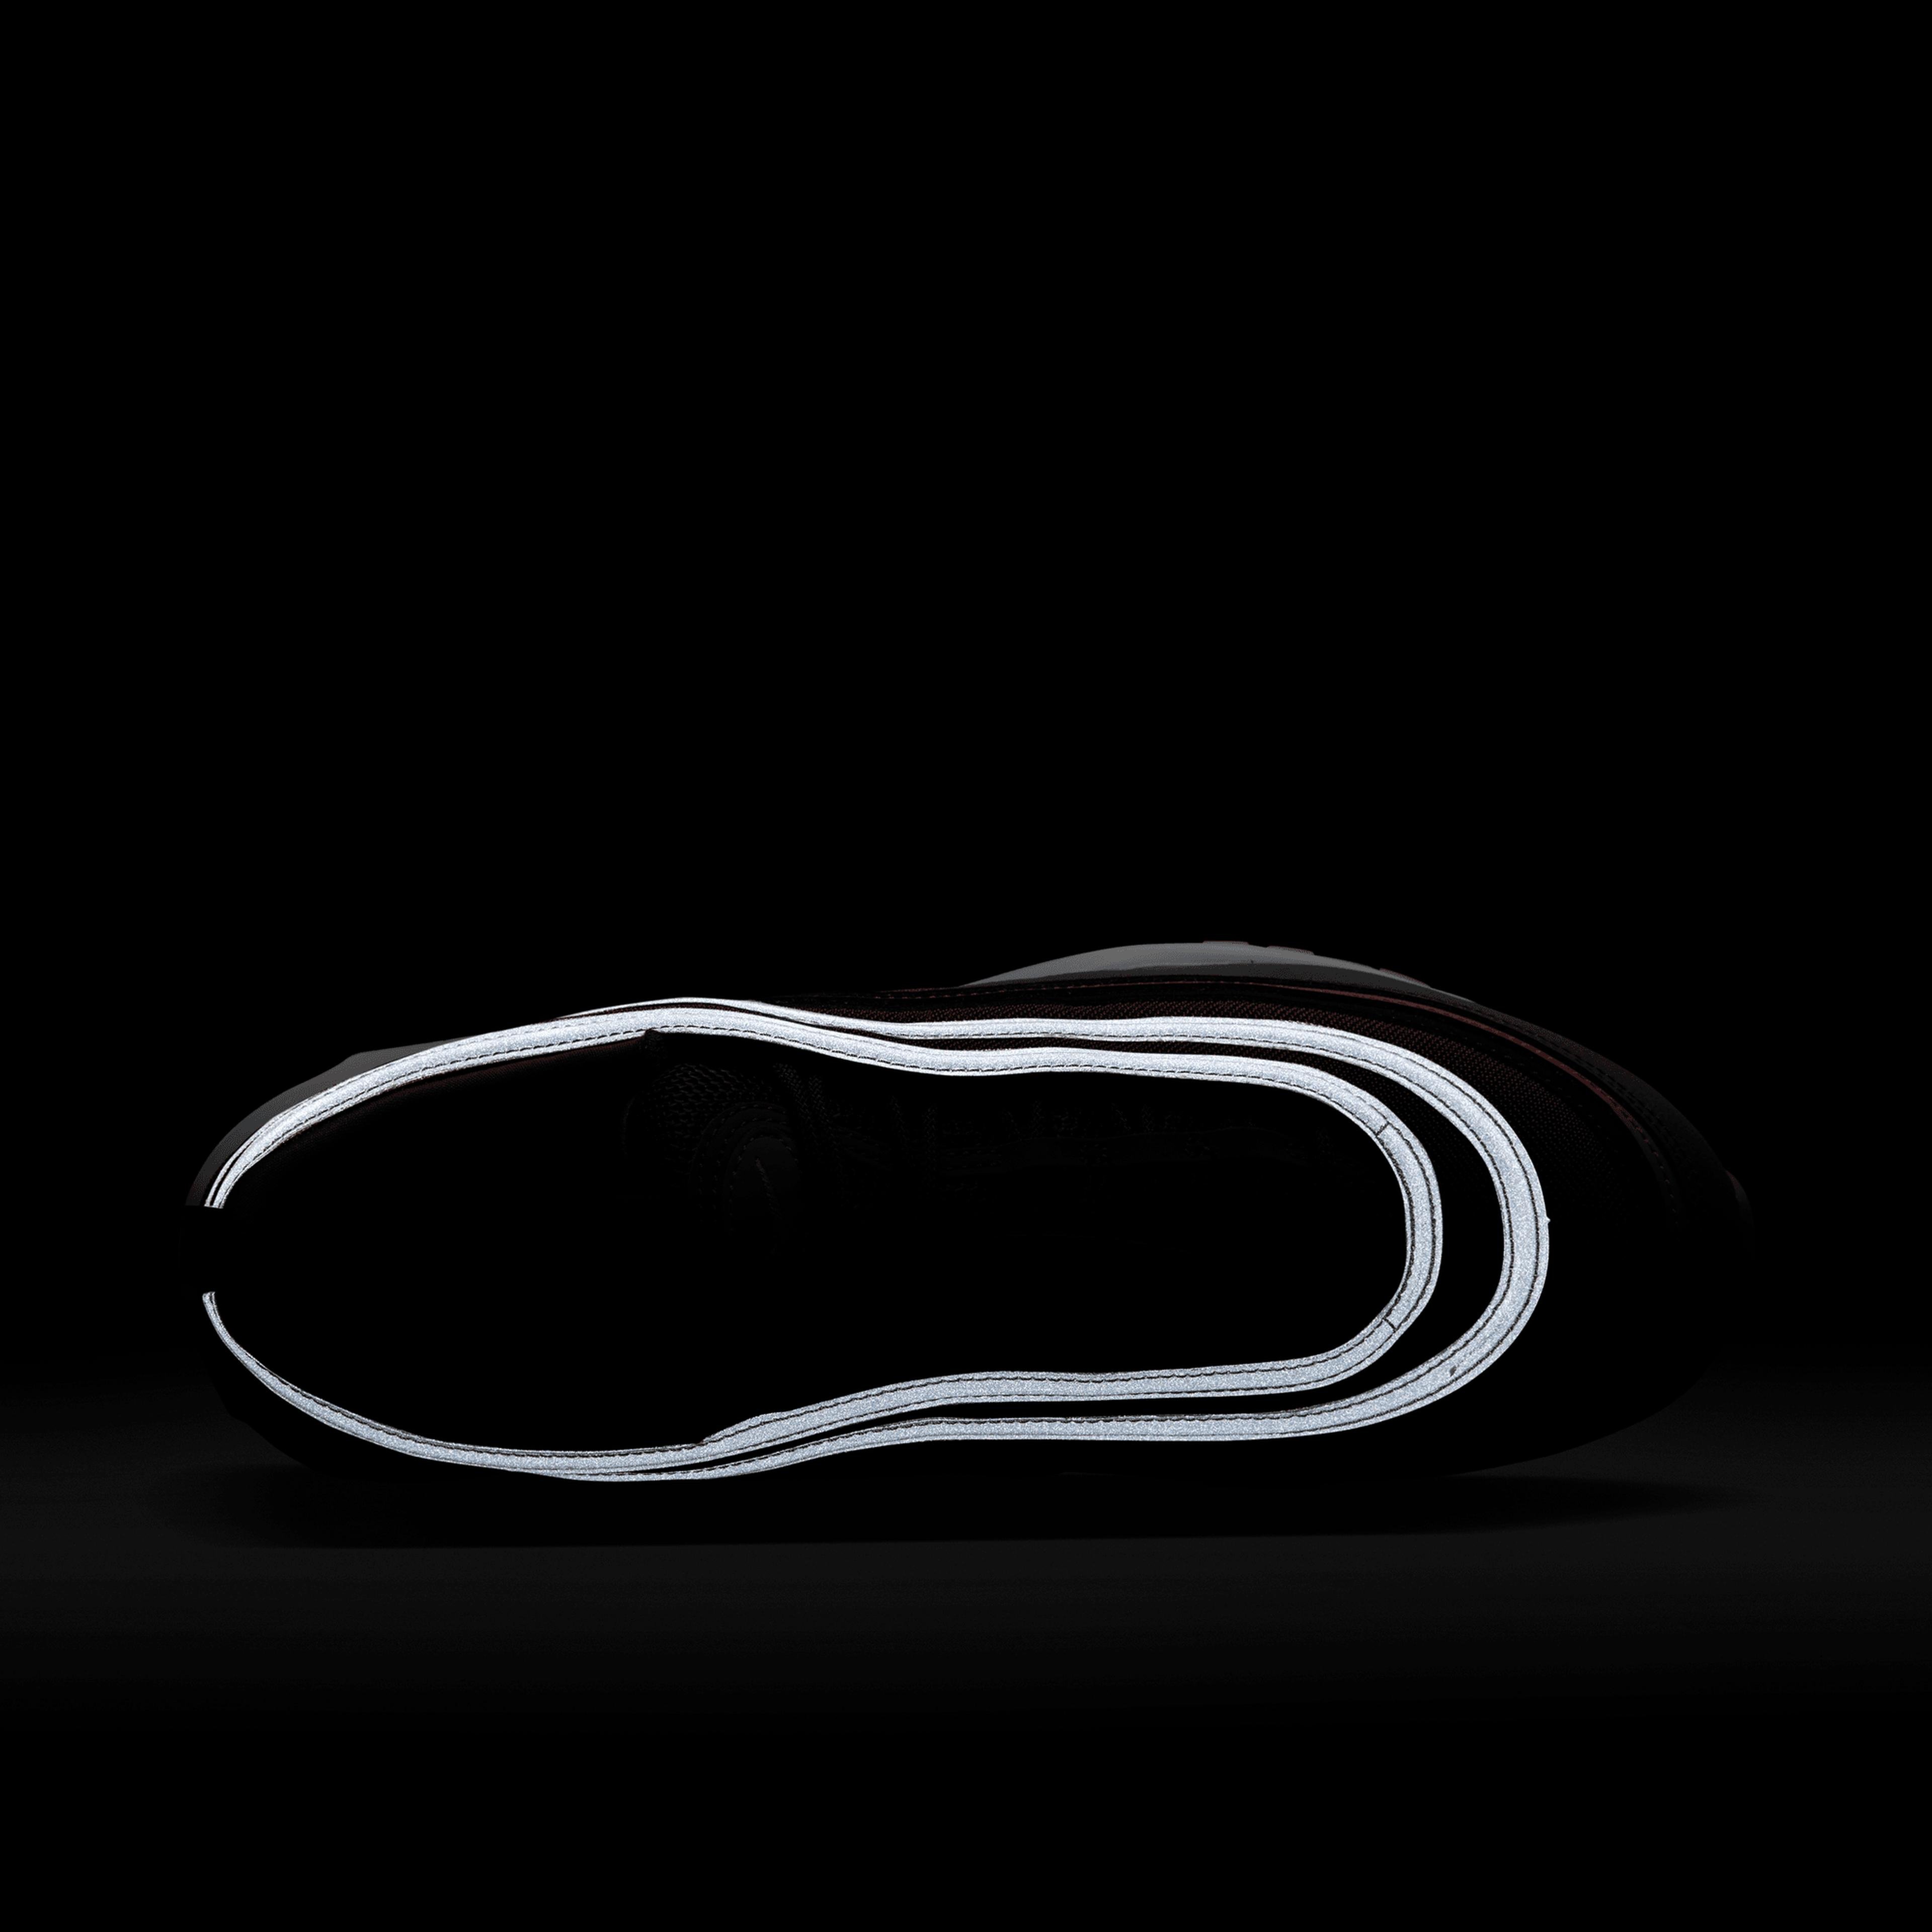 Nike Air Max 97 Erkek Siyah Spor Ayakkabı